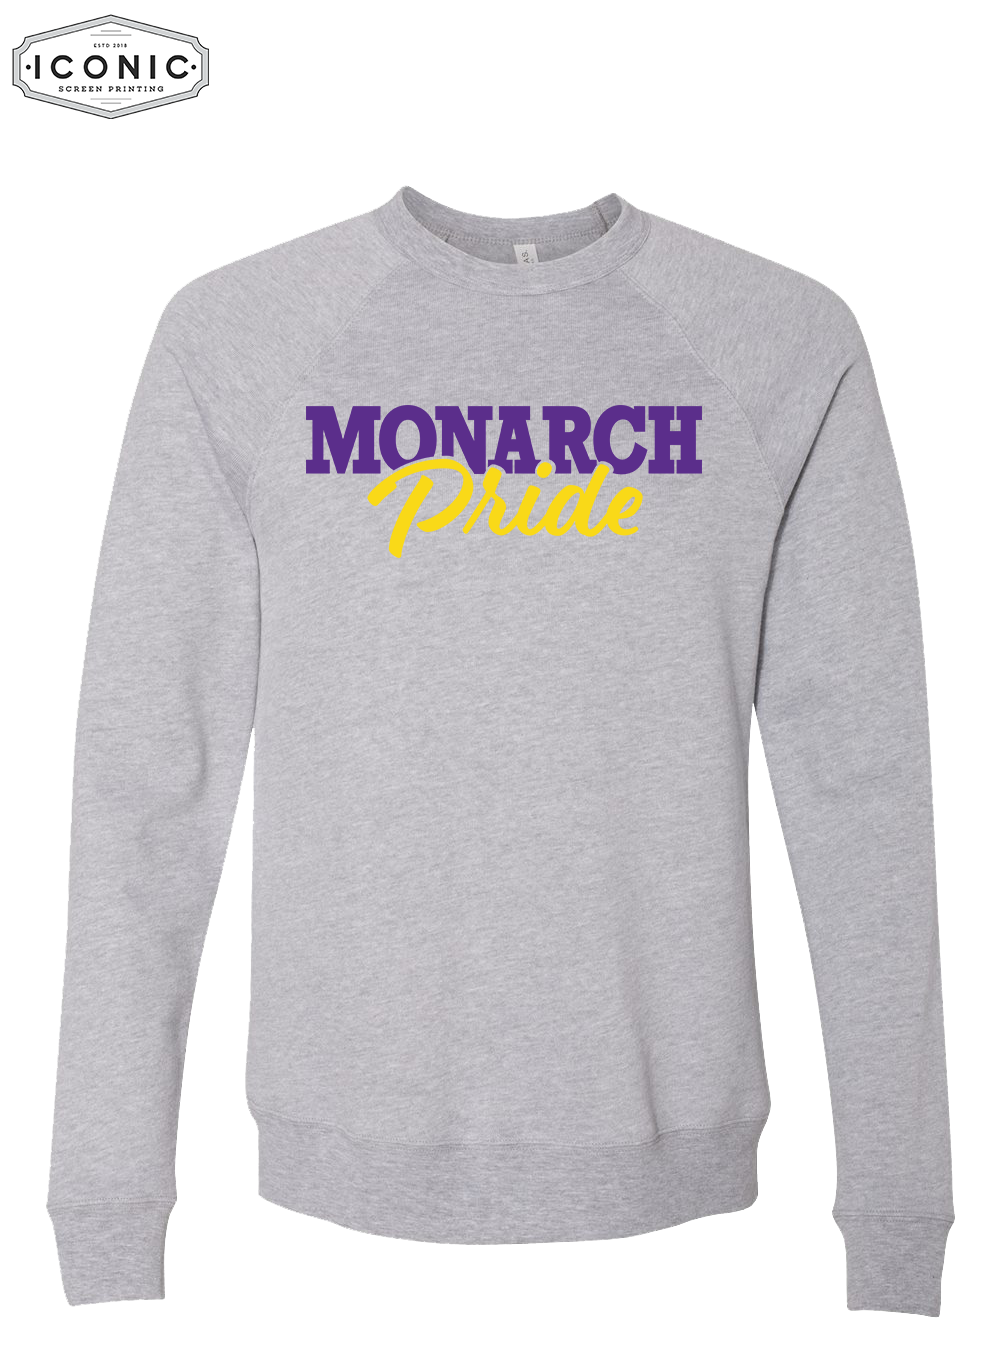 Monarch Pride - Unisex Sponge Fleece Raglan Crewneck Sweatshirt